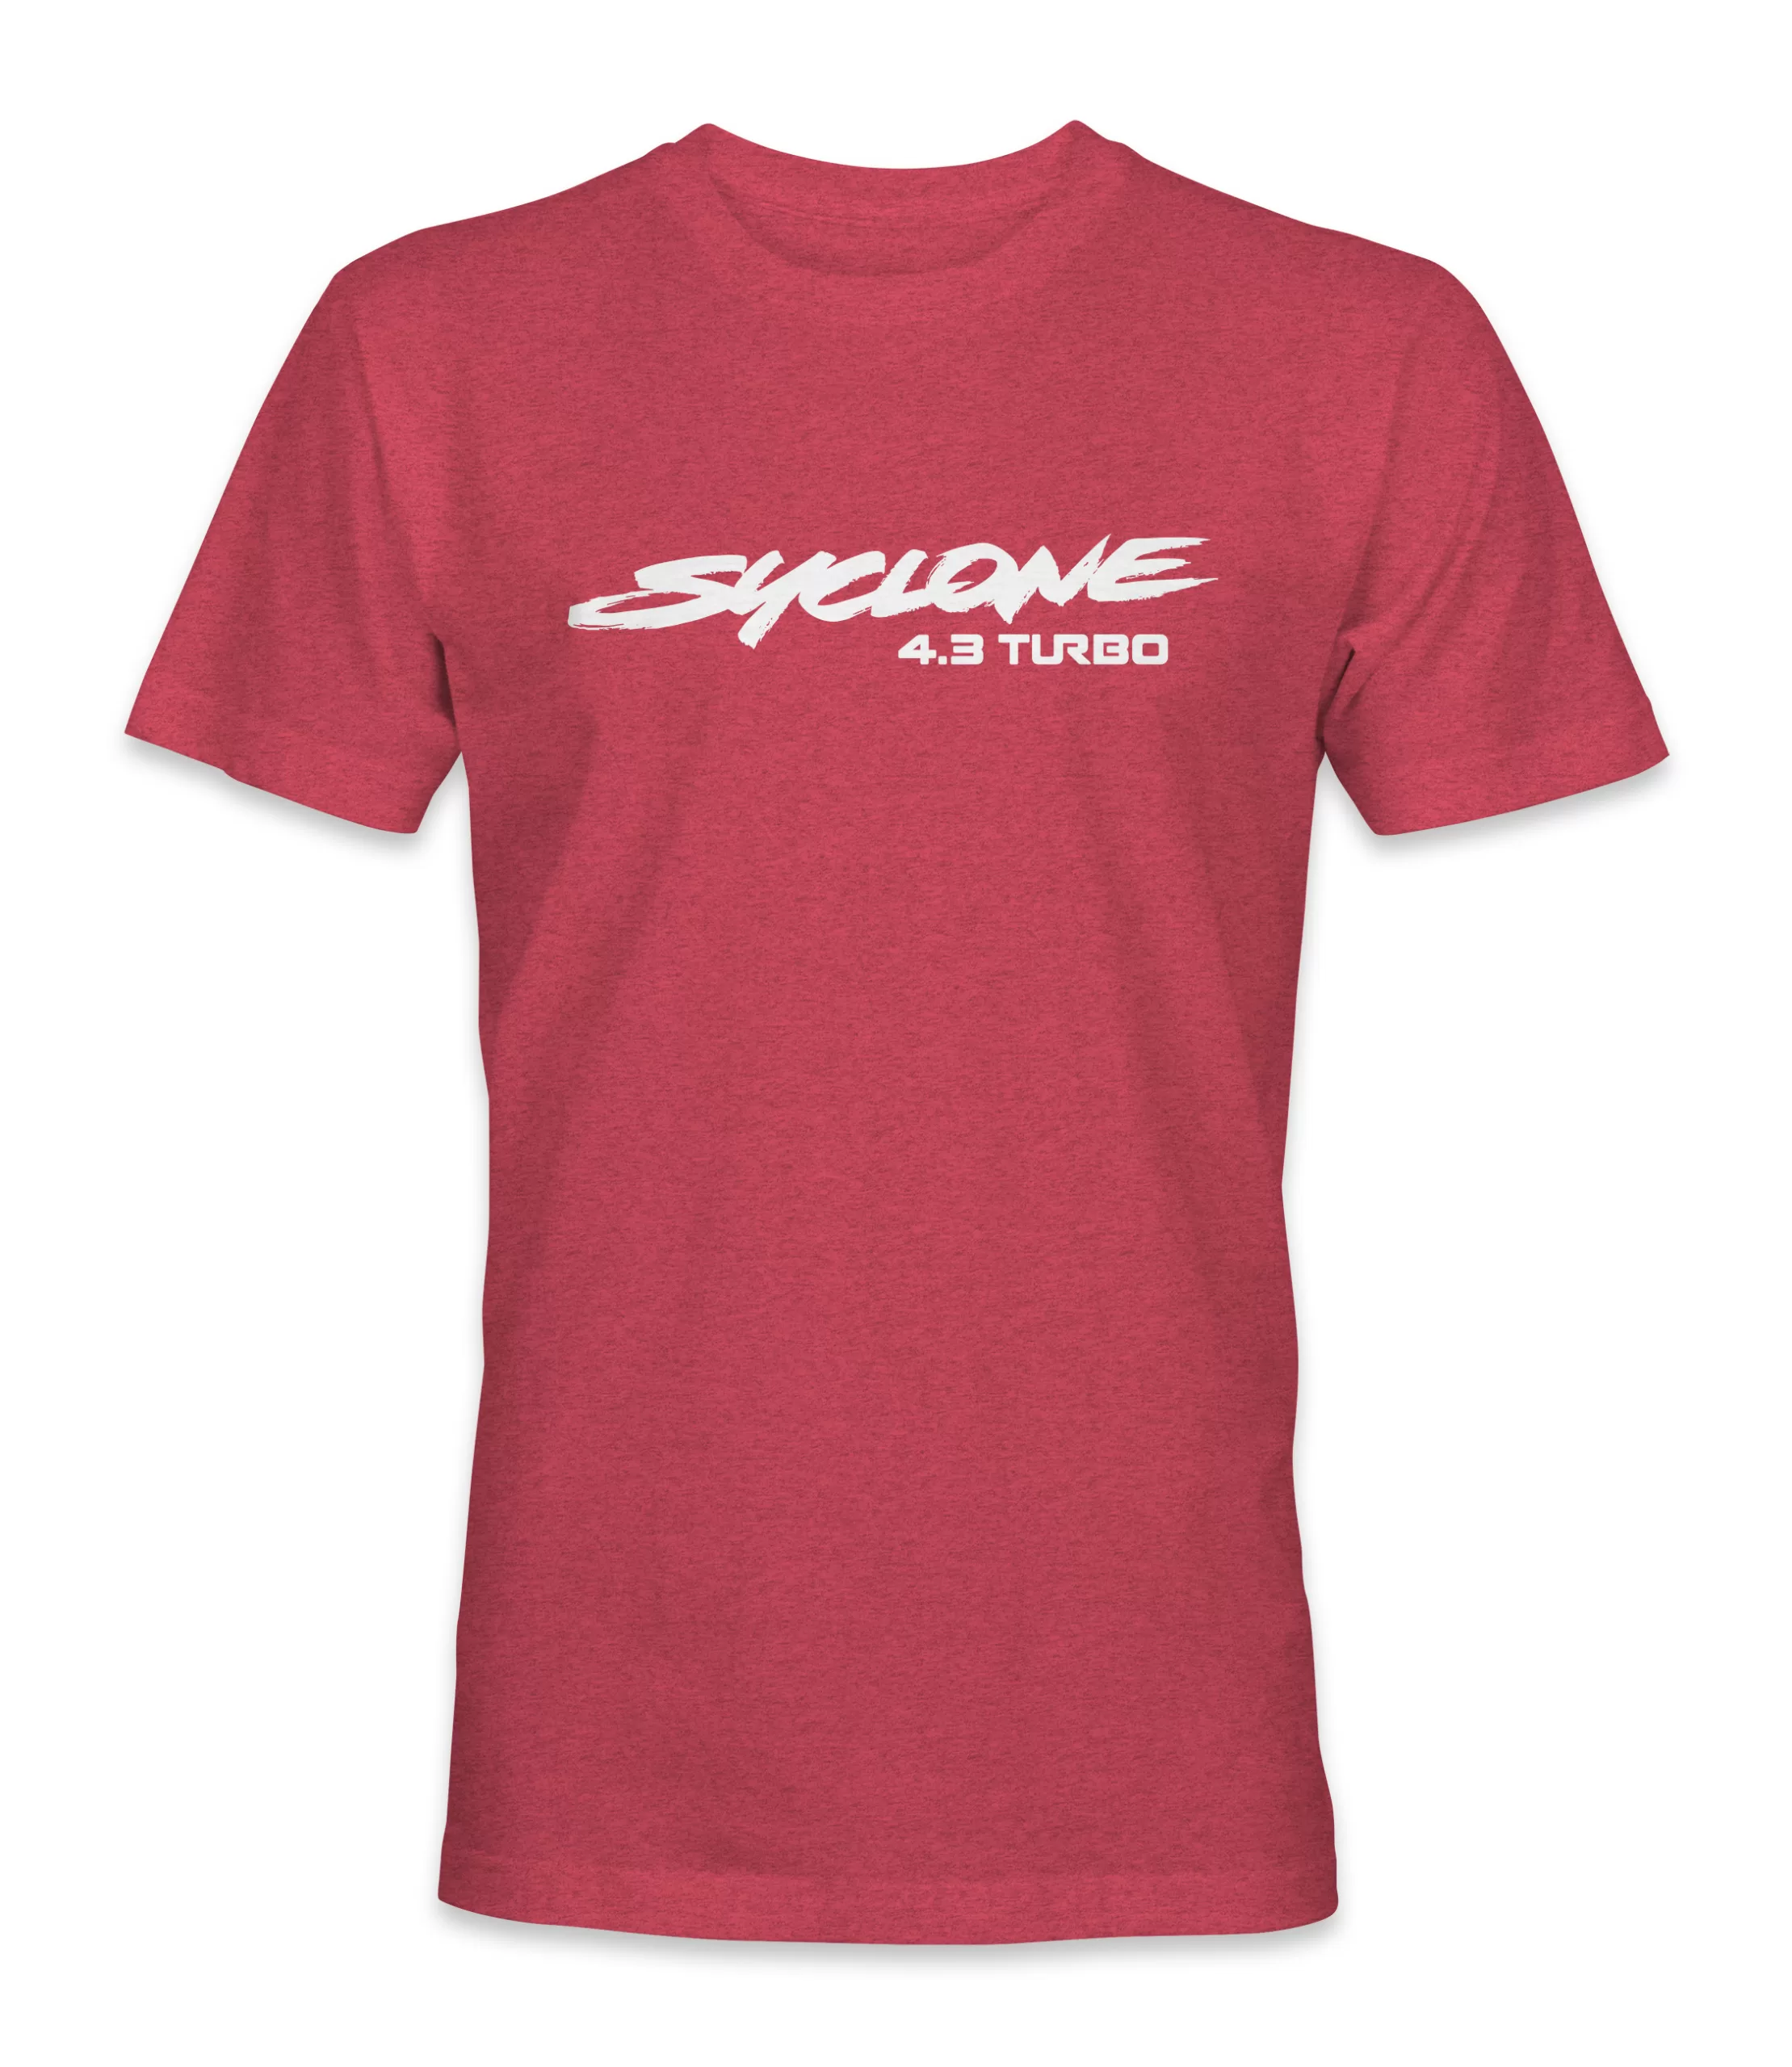 Syclone 4.3 Turbo Shirt Red